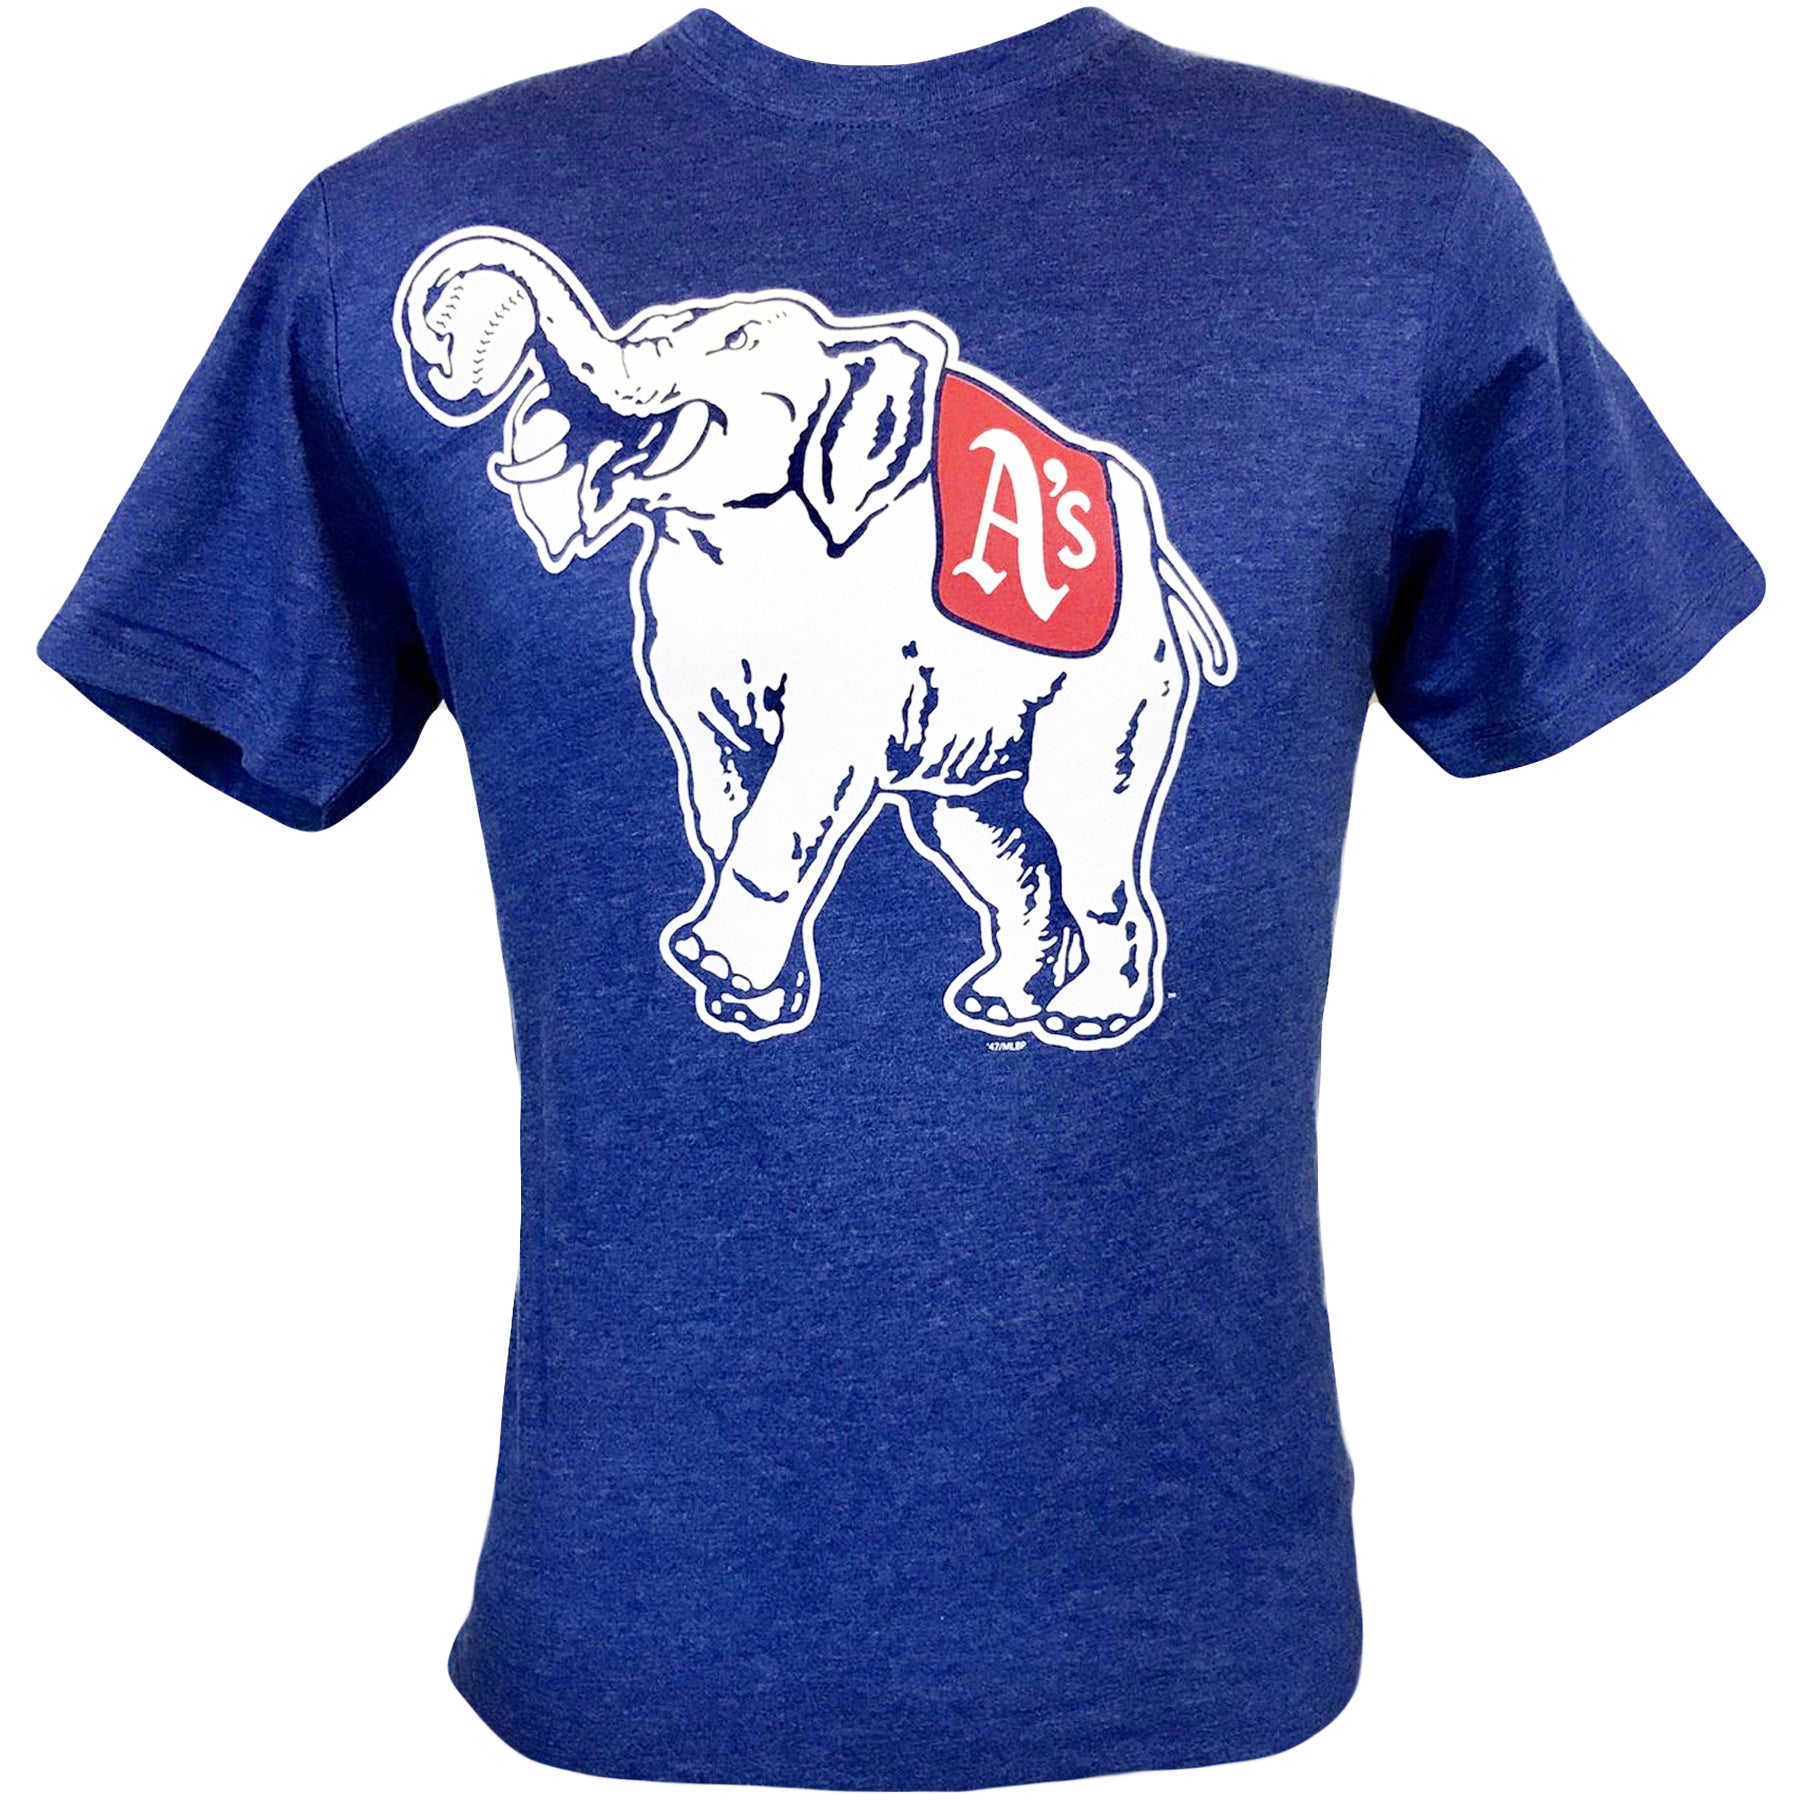 The Philadelphia Athletics vintage royal blue t-shirt features the retro Philadelphia Athletics Elephant logo